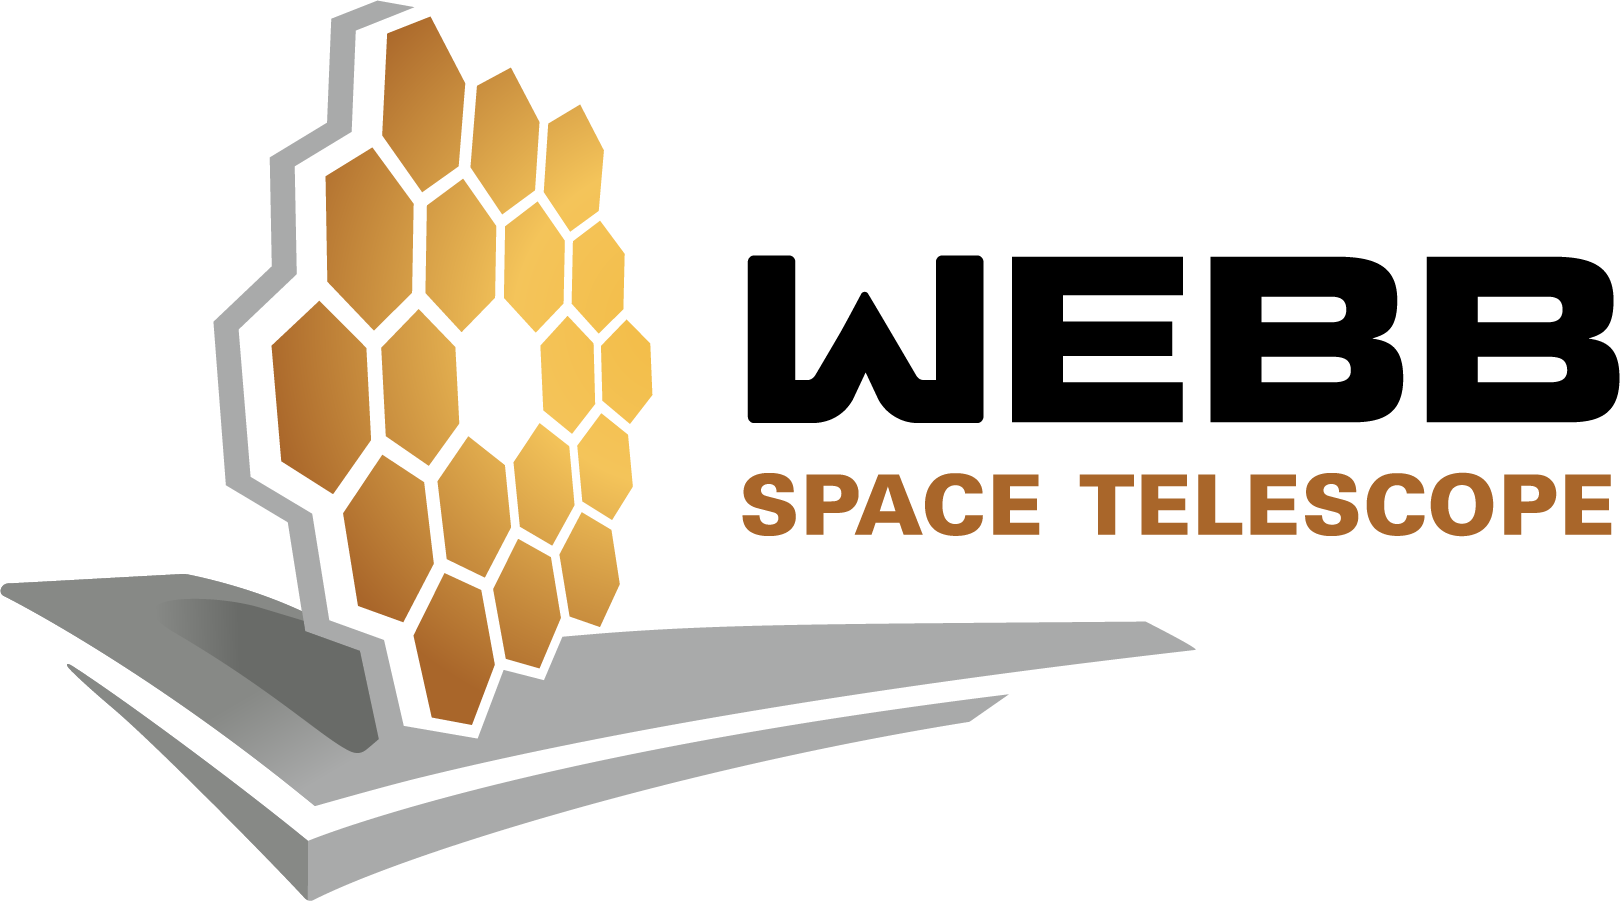 General 1620x901 NASA James Webb Space Telescope logo hexagon simple background